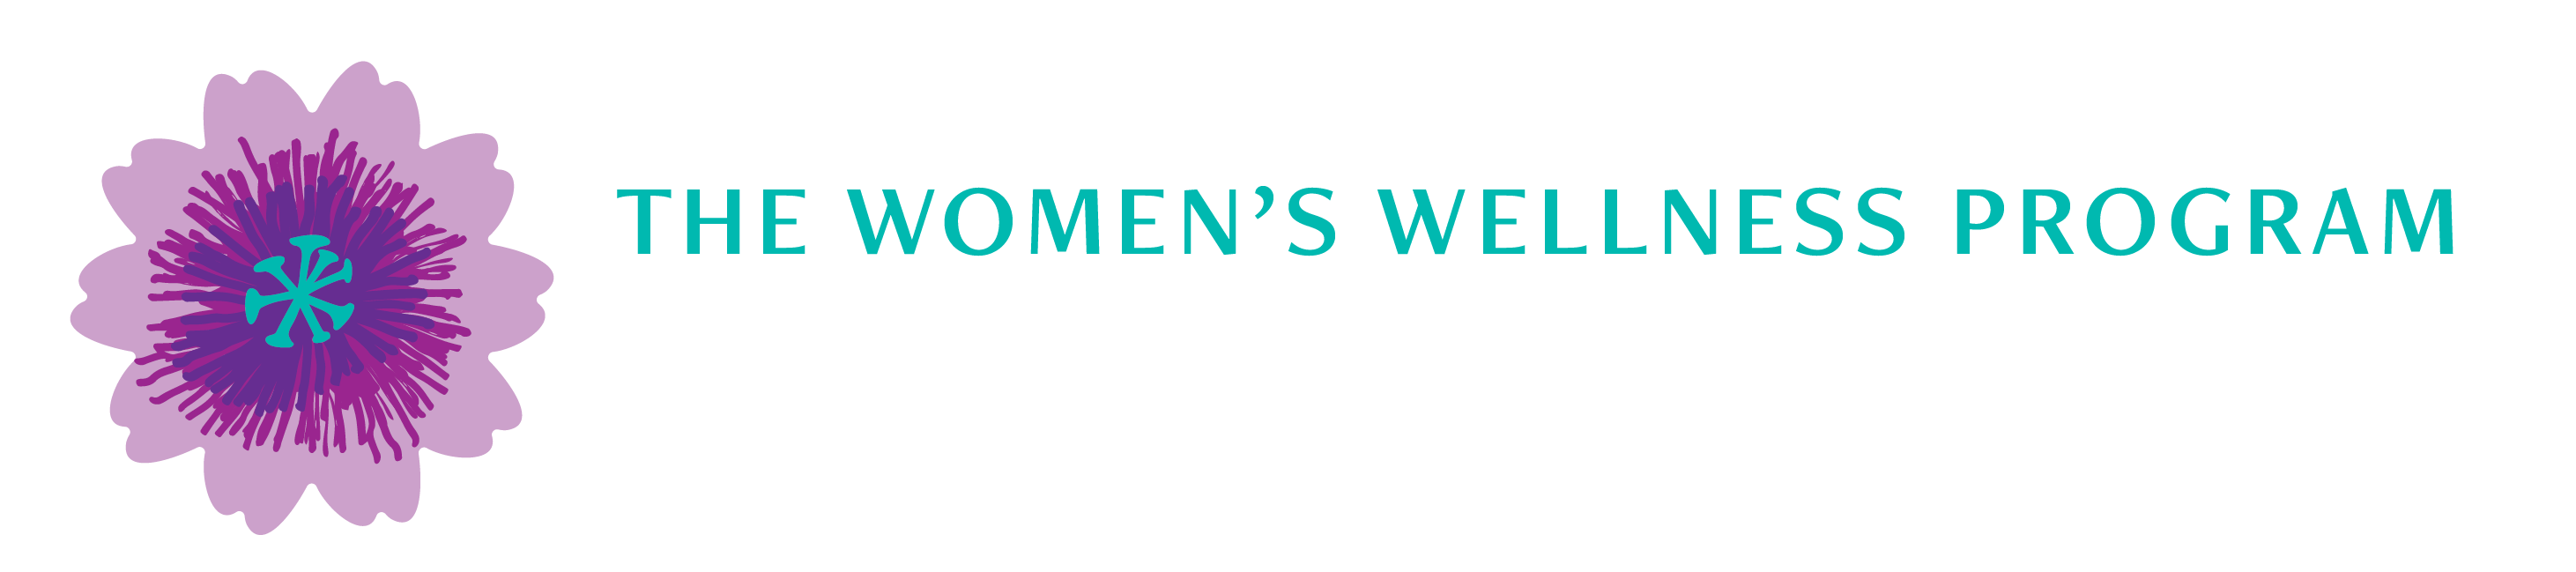 The Women’s Wellness program for Irritable Bowel Syndrome (IBS)